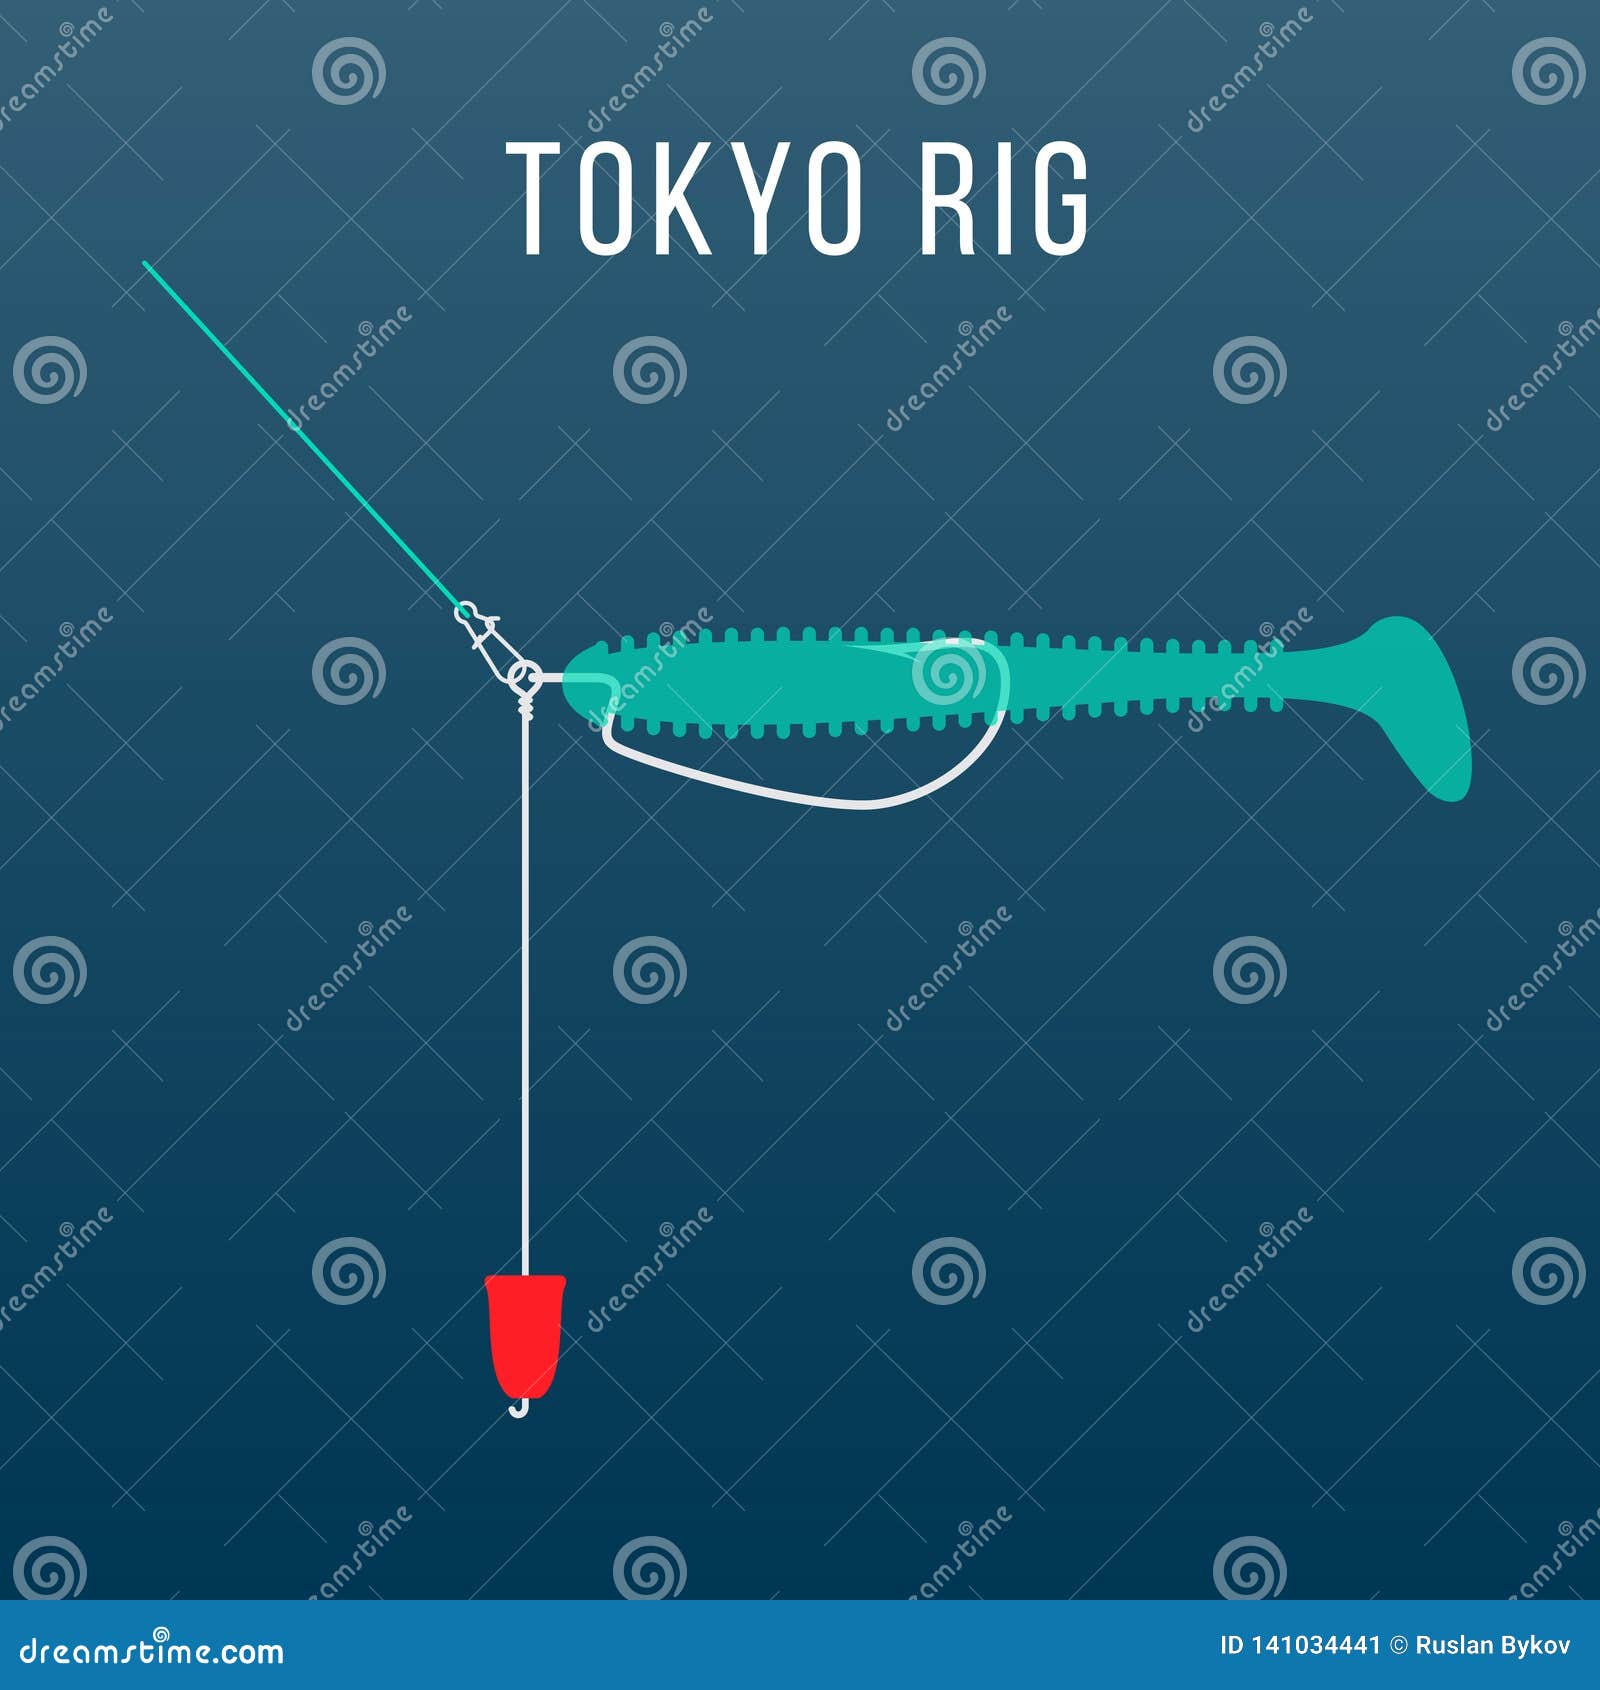 Tokyo Rig Fishing Tackle Setup. Stock Vector - Illustration of